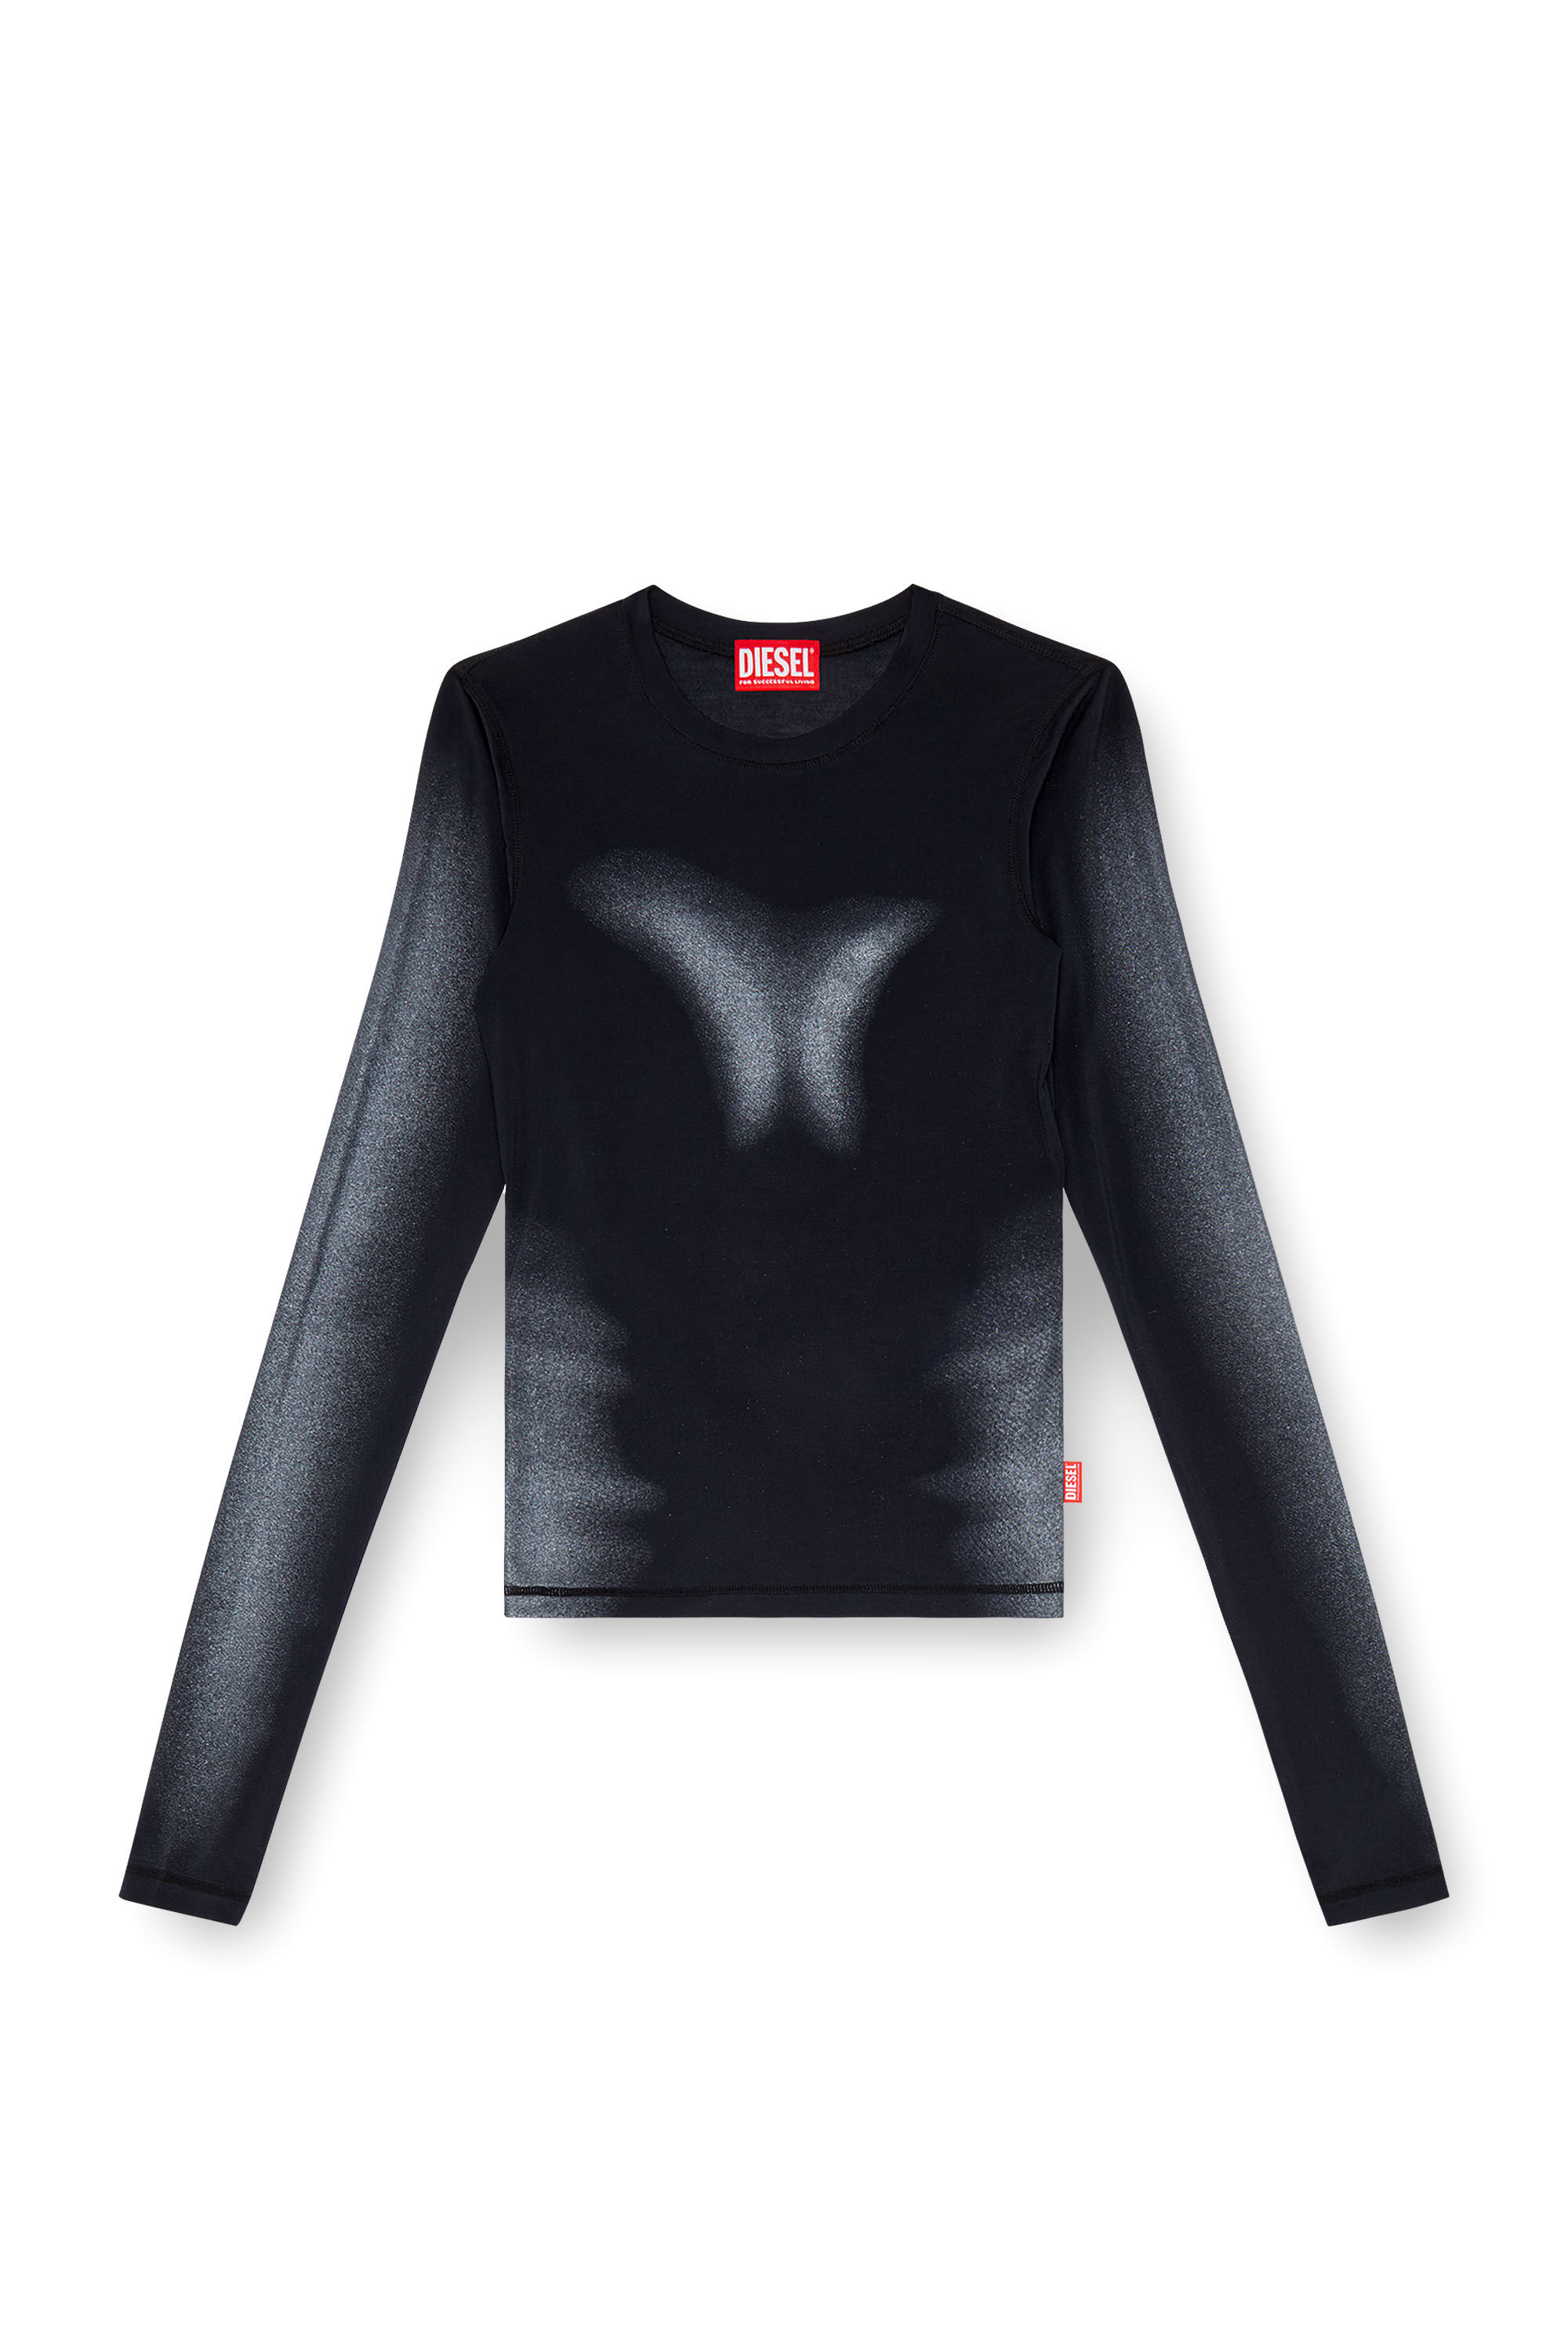 Diesel - T-ILON, Woman Long-sleeve T-shirt with metallic effects in Black - Image 2